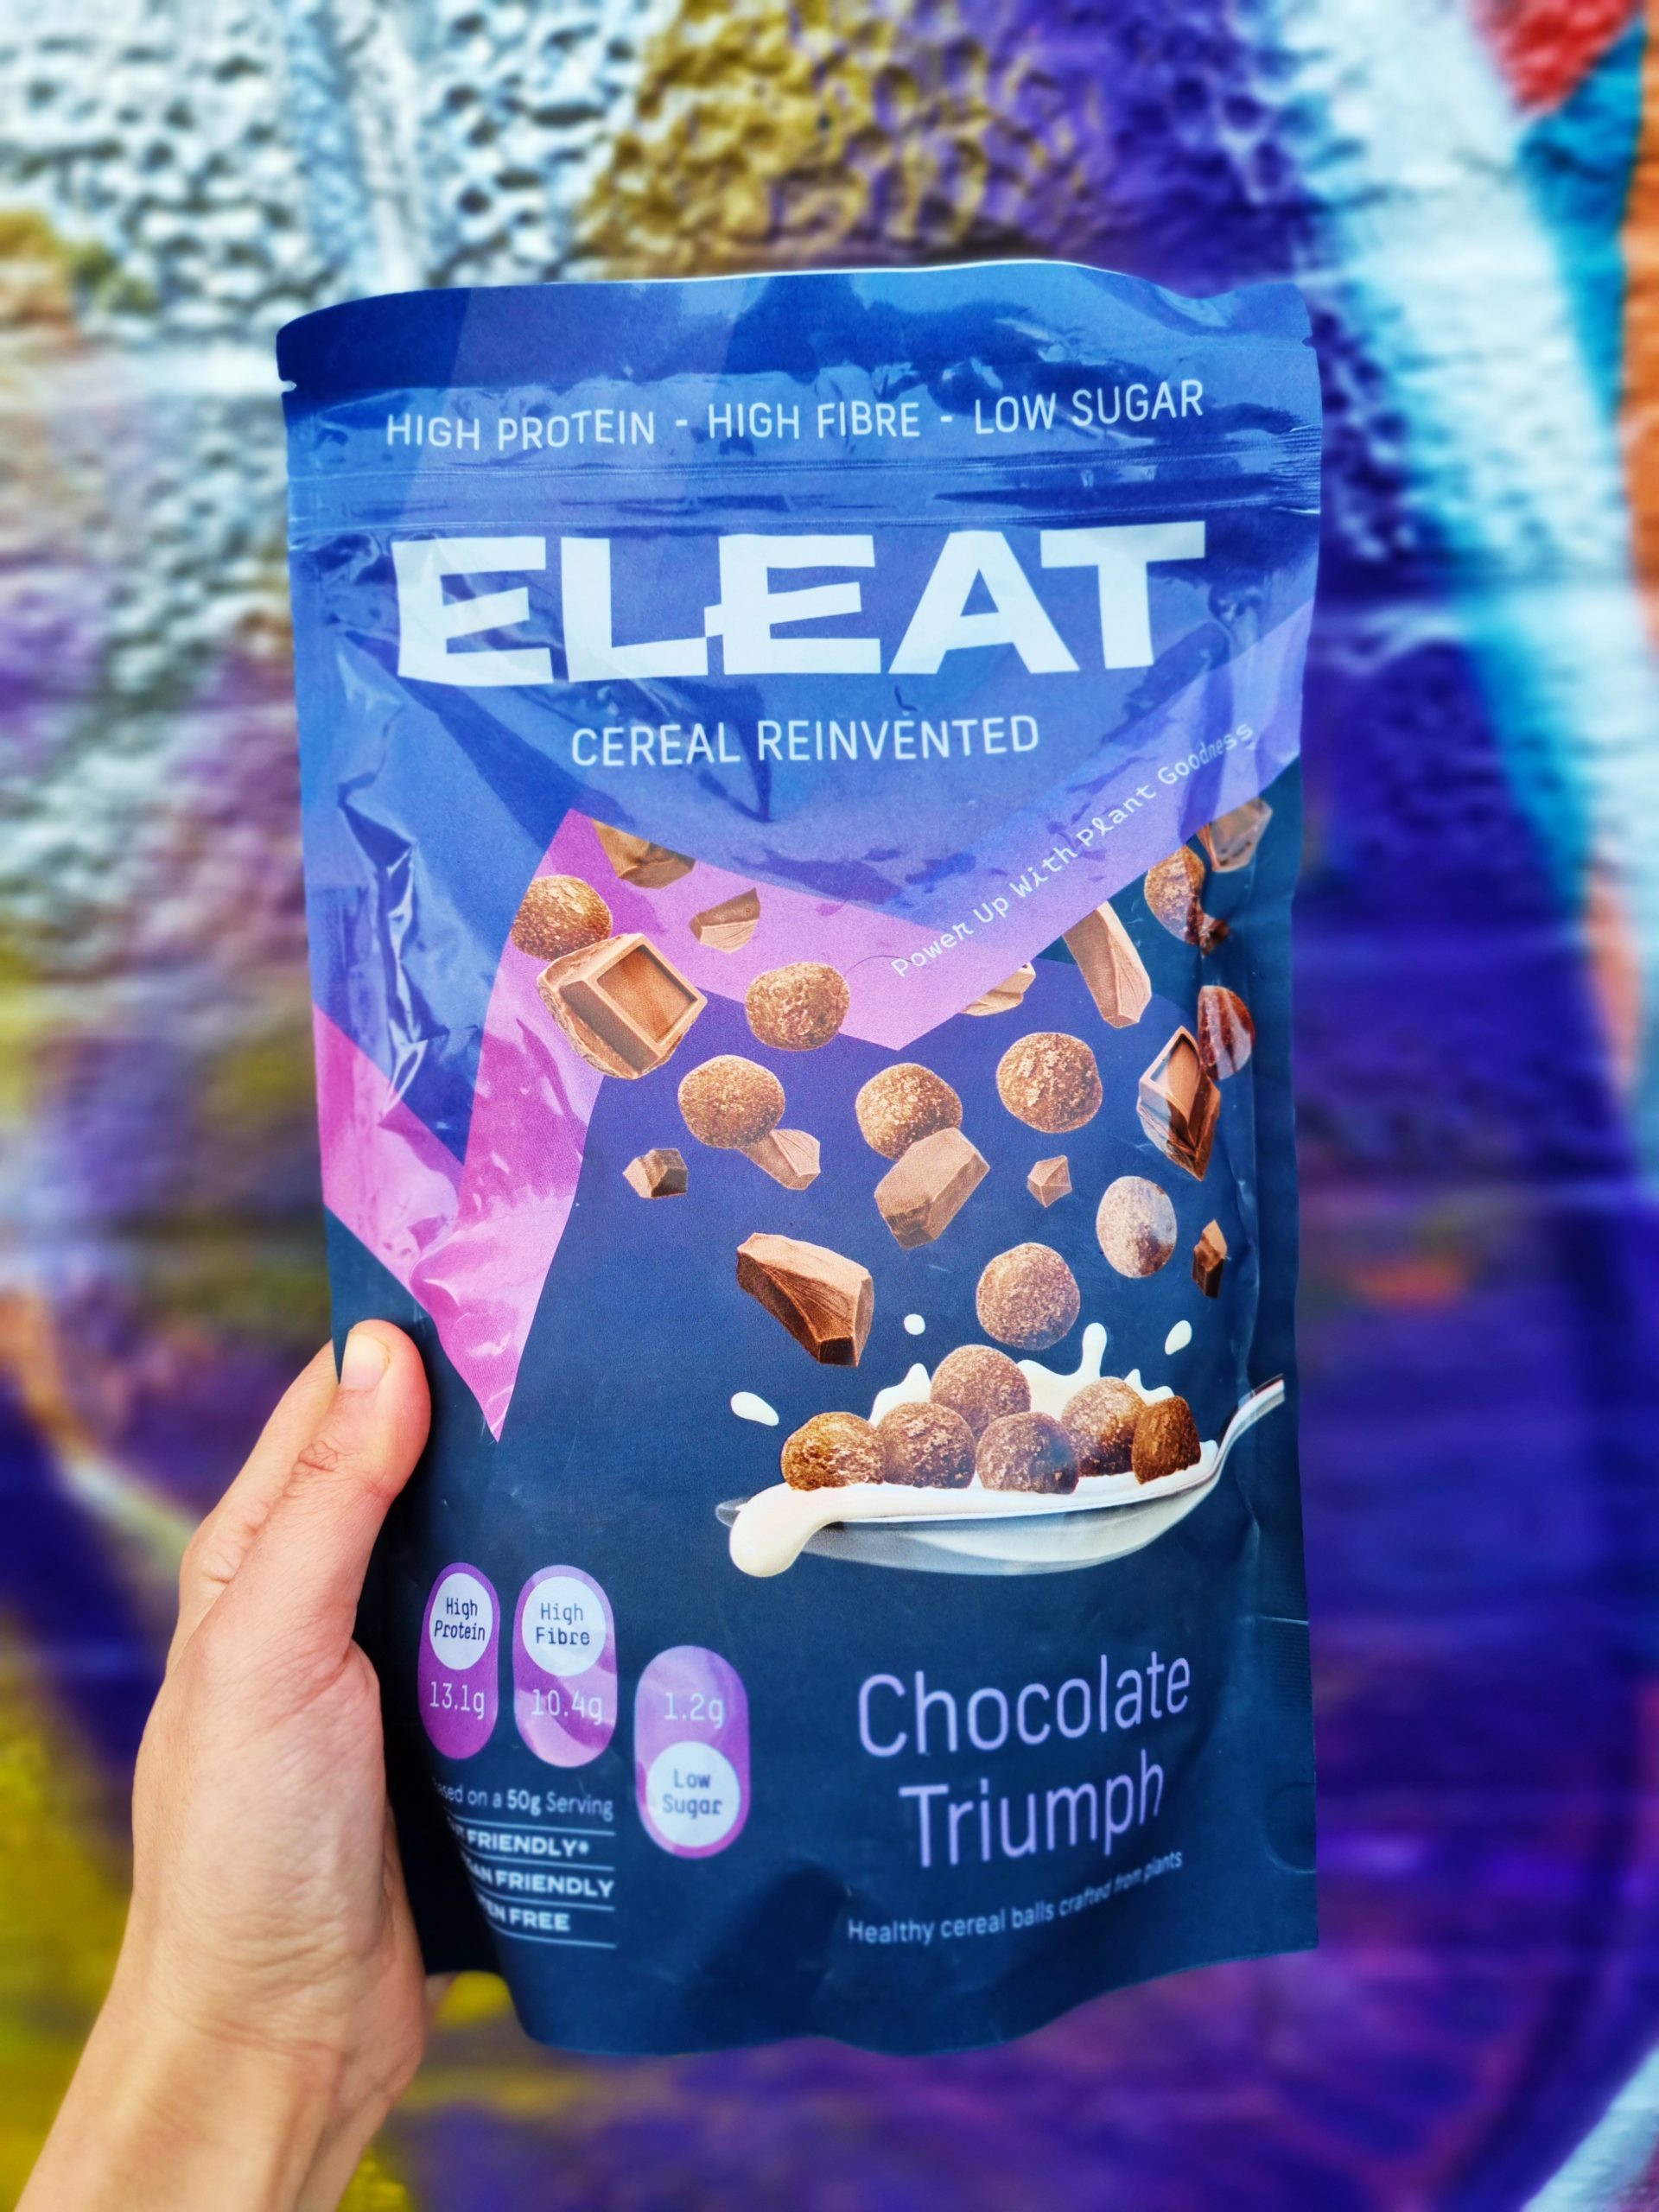 <img src="eleatjpg" alt="eleat chocolate cereal colourful veganuary"/> 